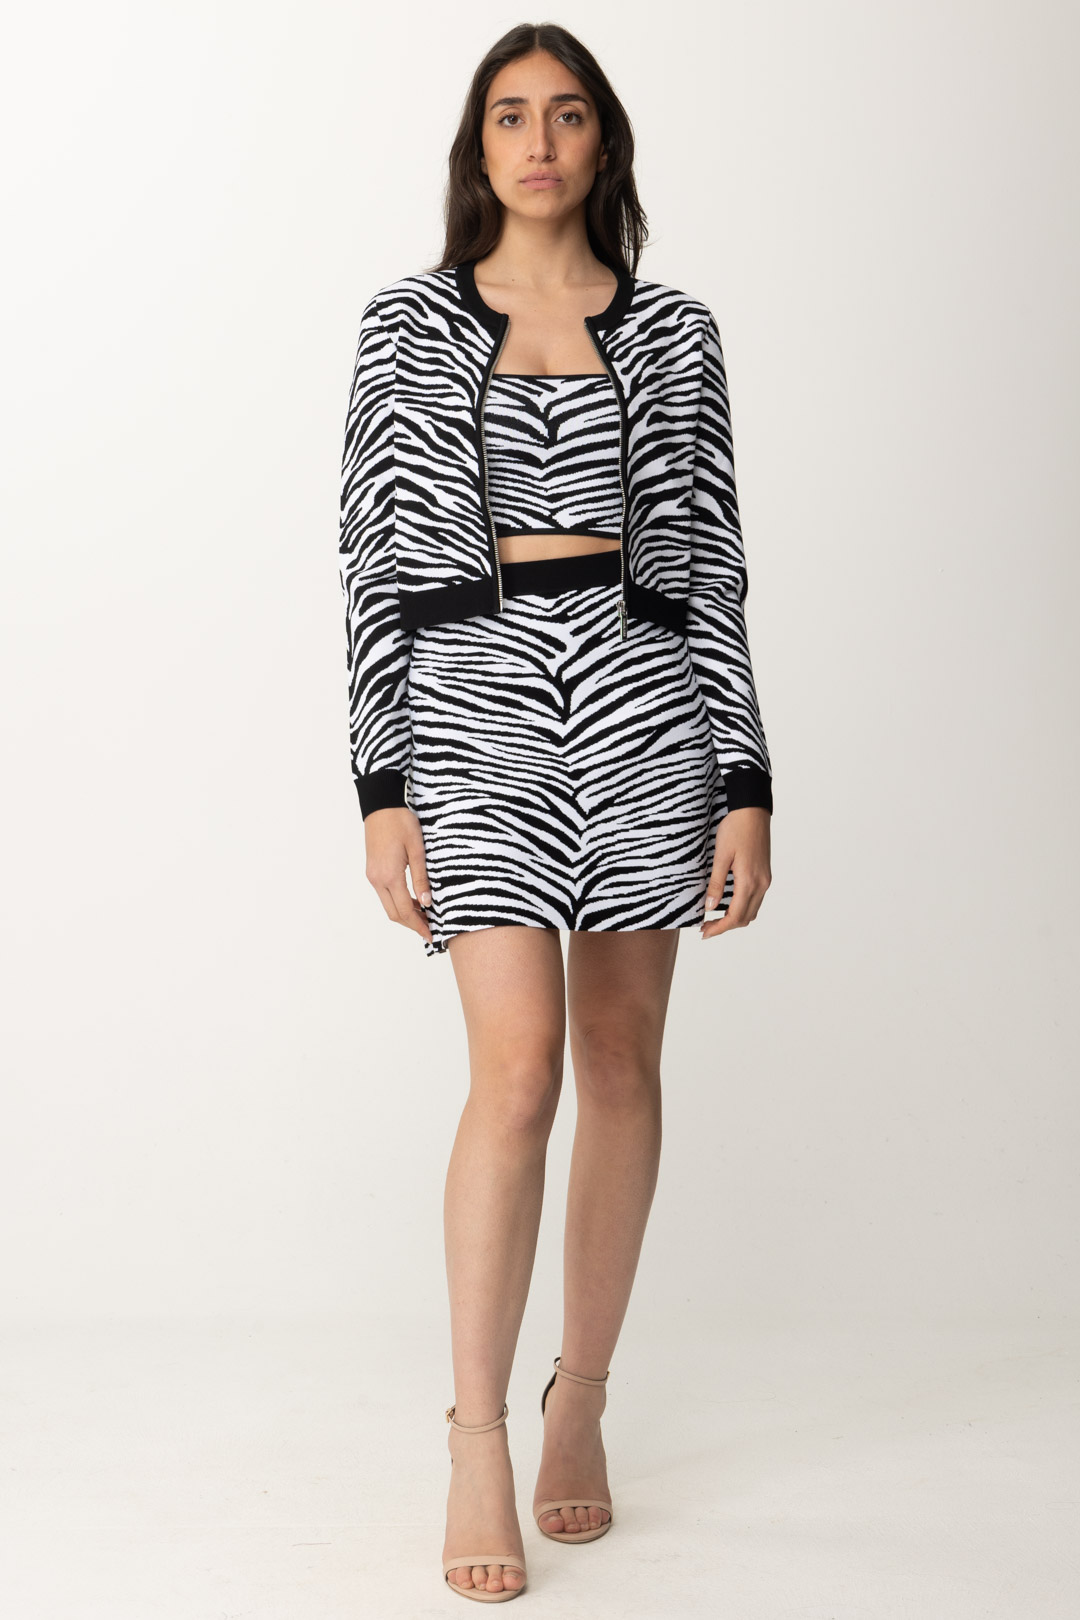 Preview: Michael Kors Zebra pattern pullover Black/White